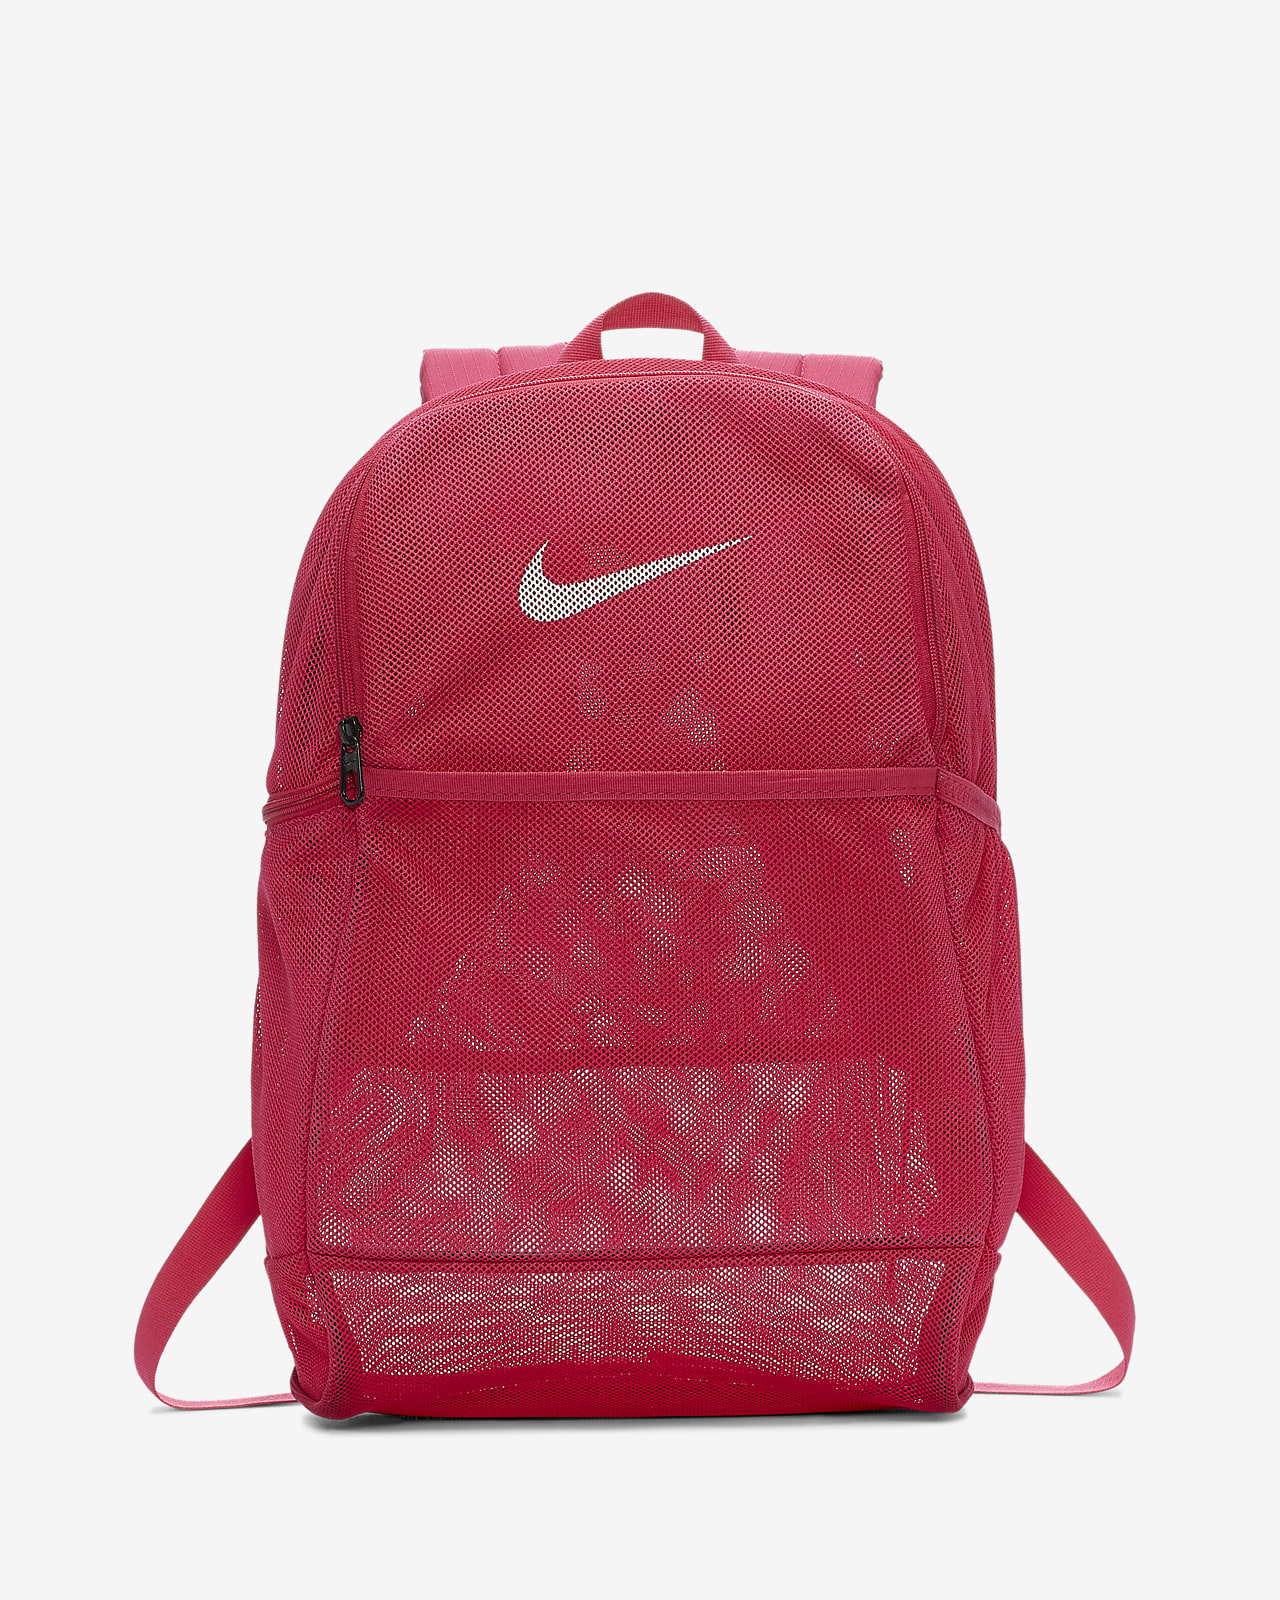 Nike Brasilia Mesh Training Backpack (26L)